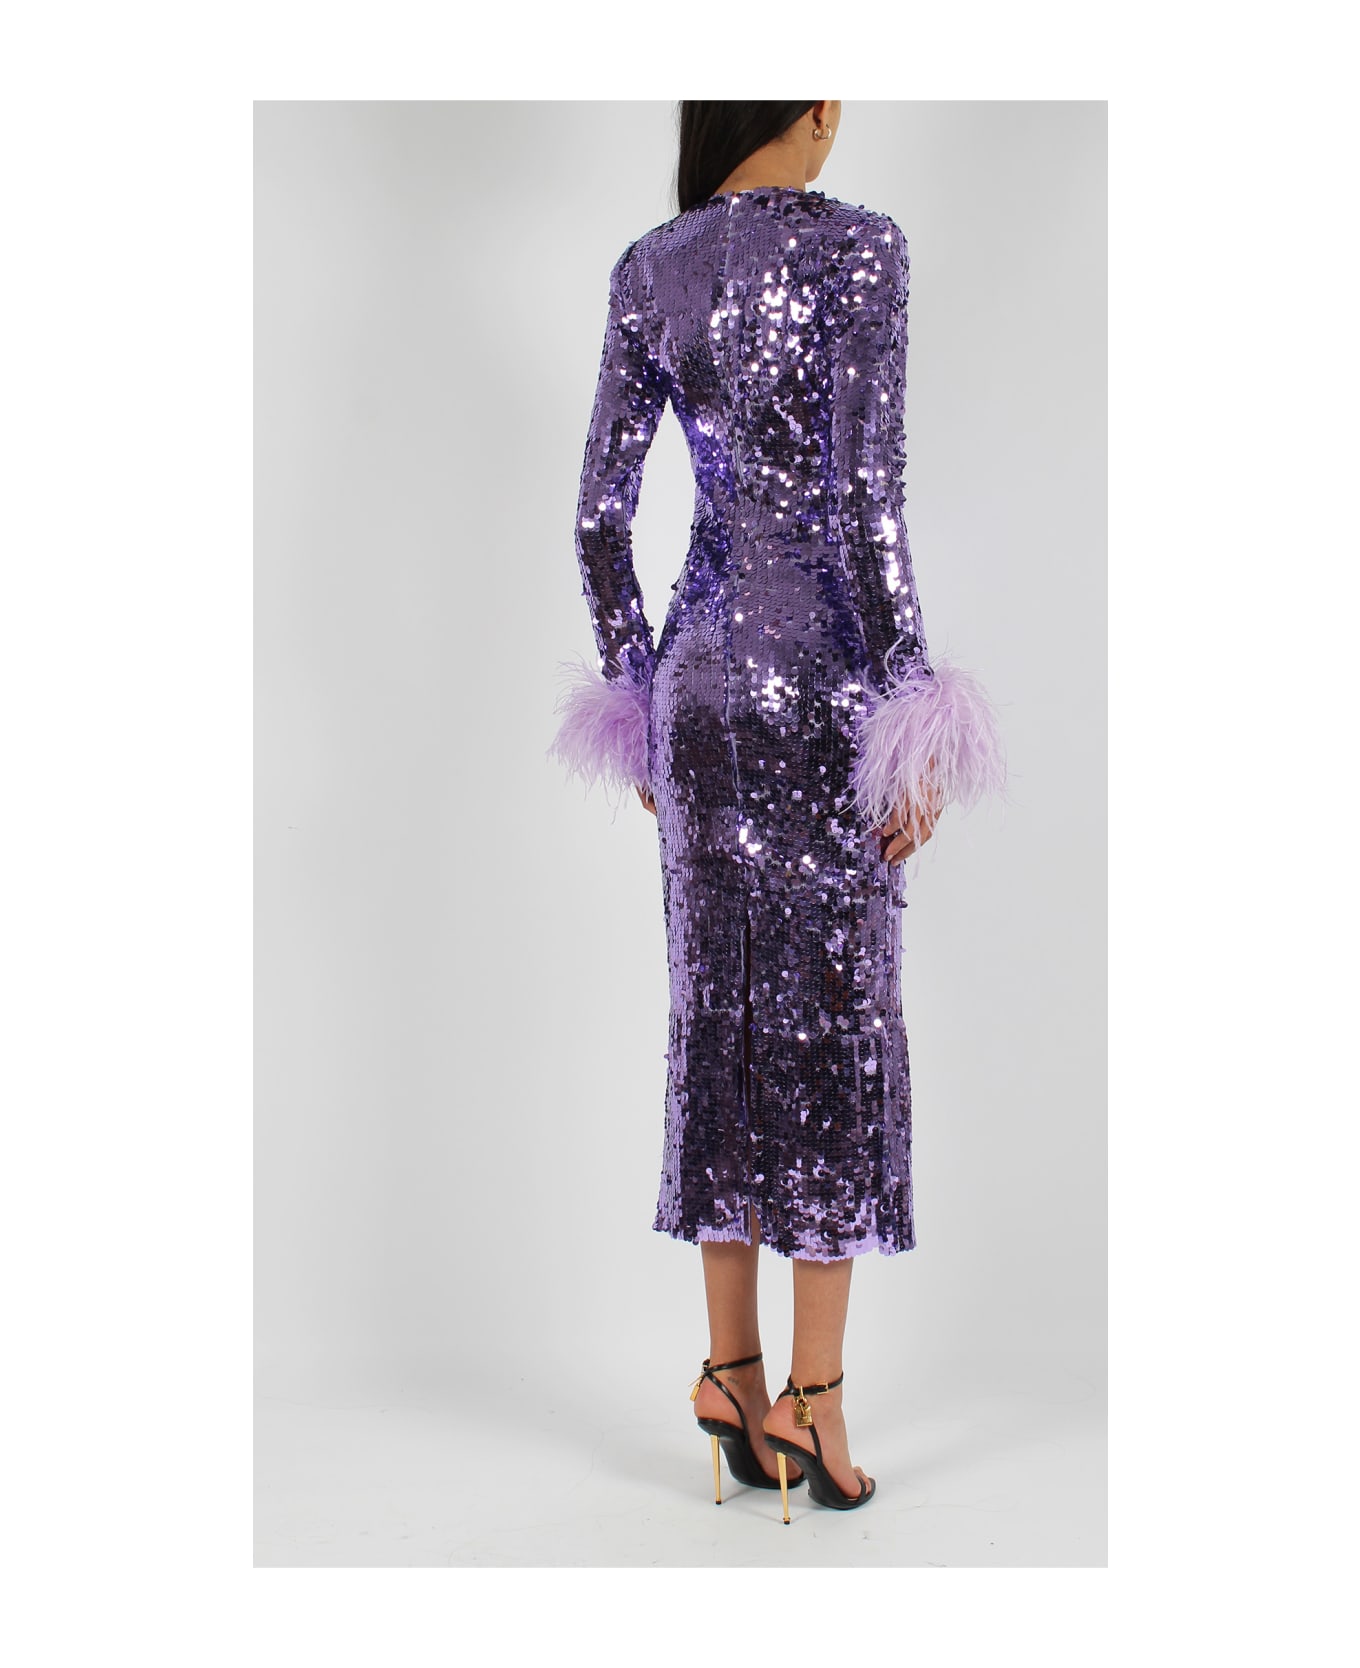 NEW ARRIVALS Veronique In Le Palace Dress - Pink & Purple